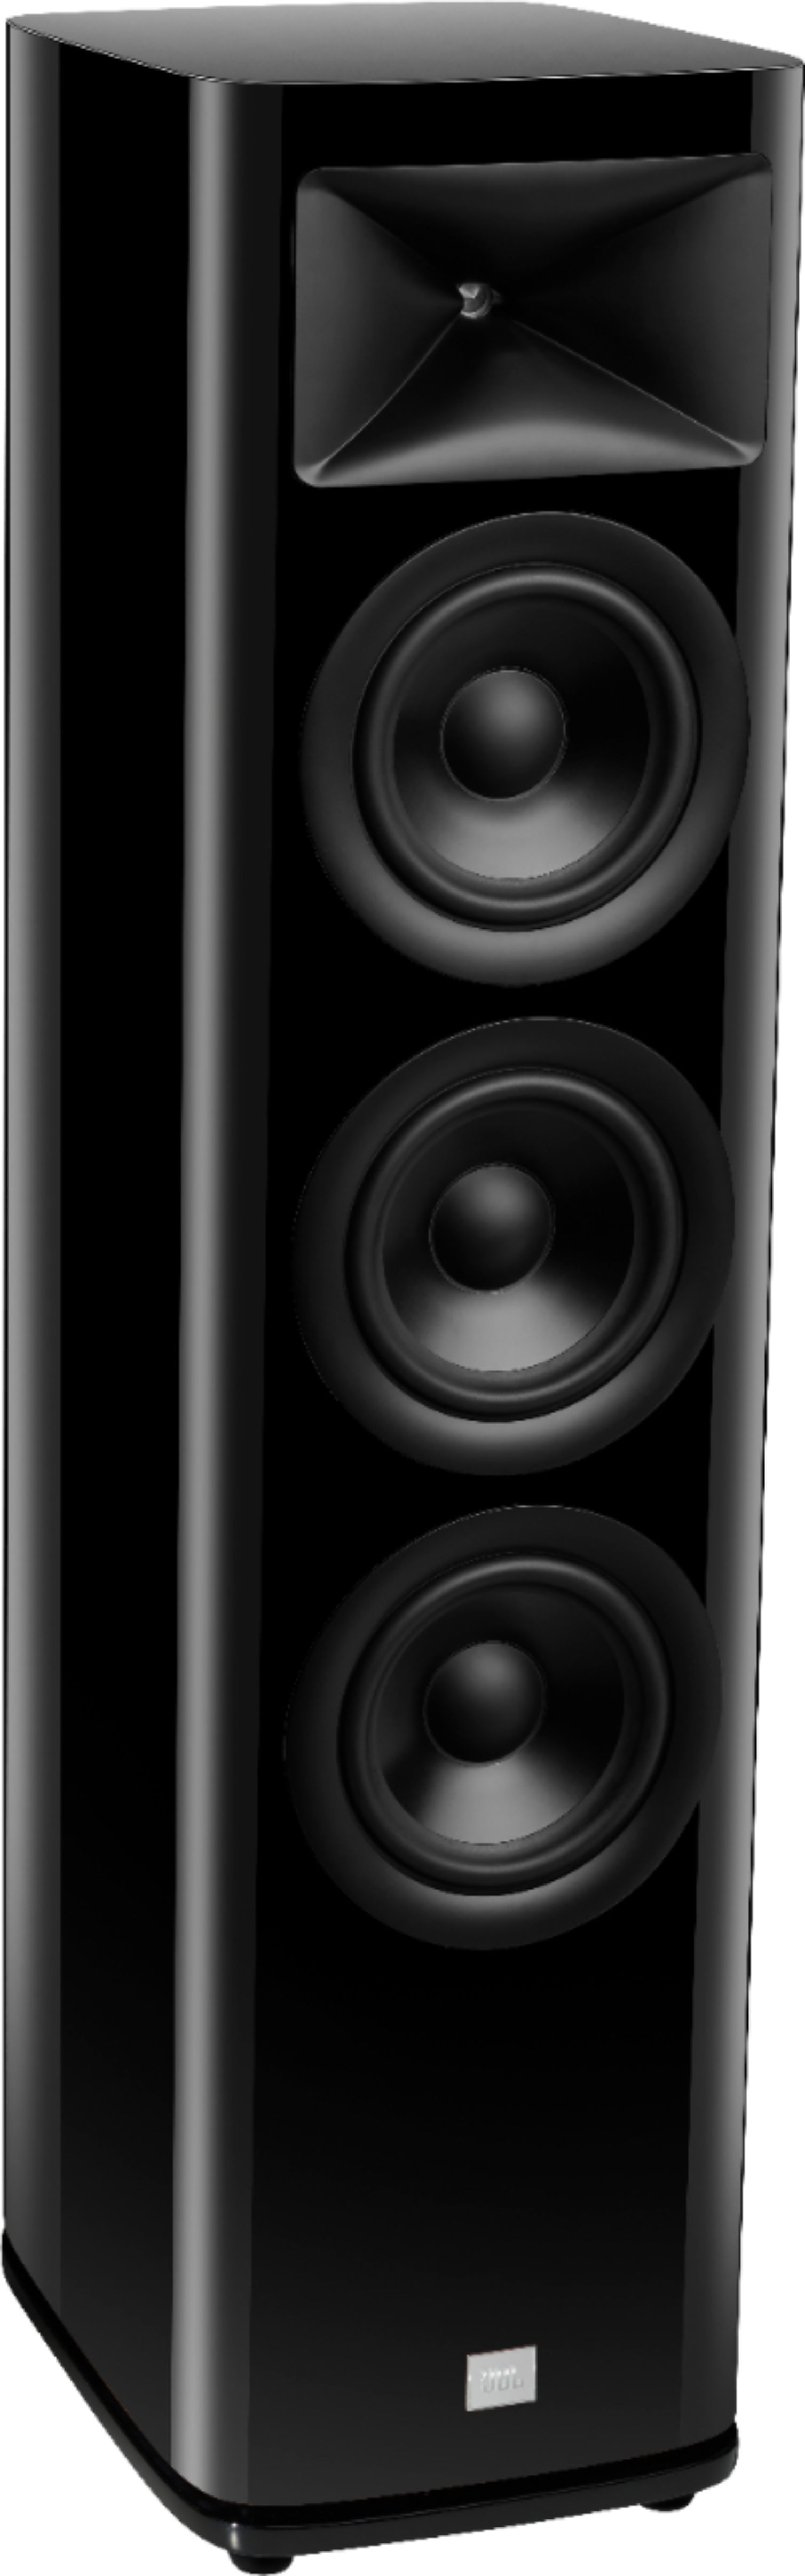 Left View: JBL - HDI3600 Triple 6.5-inch 2-1/2 way Floorstanding Loudspeaker with 1" compression tweeter - Gloss Black Finish